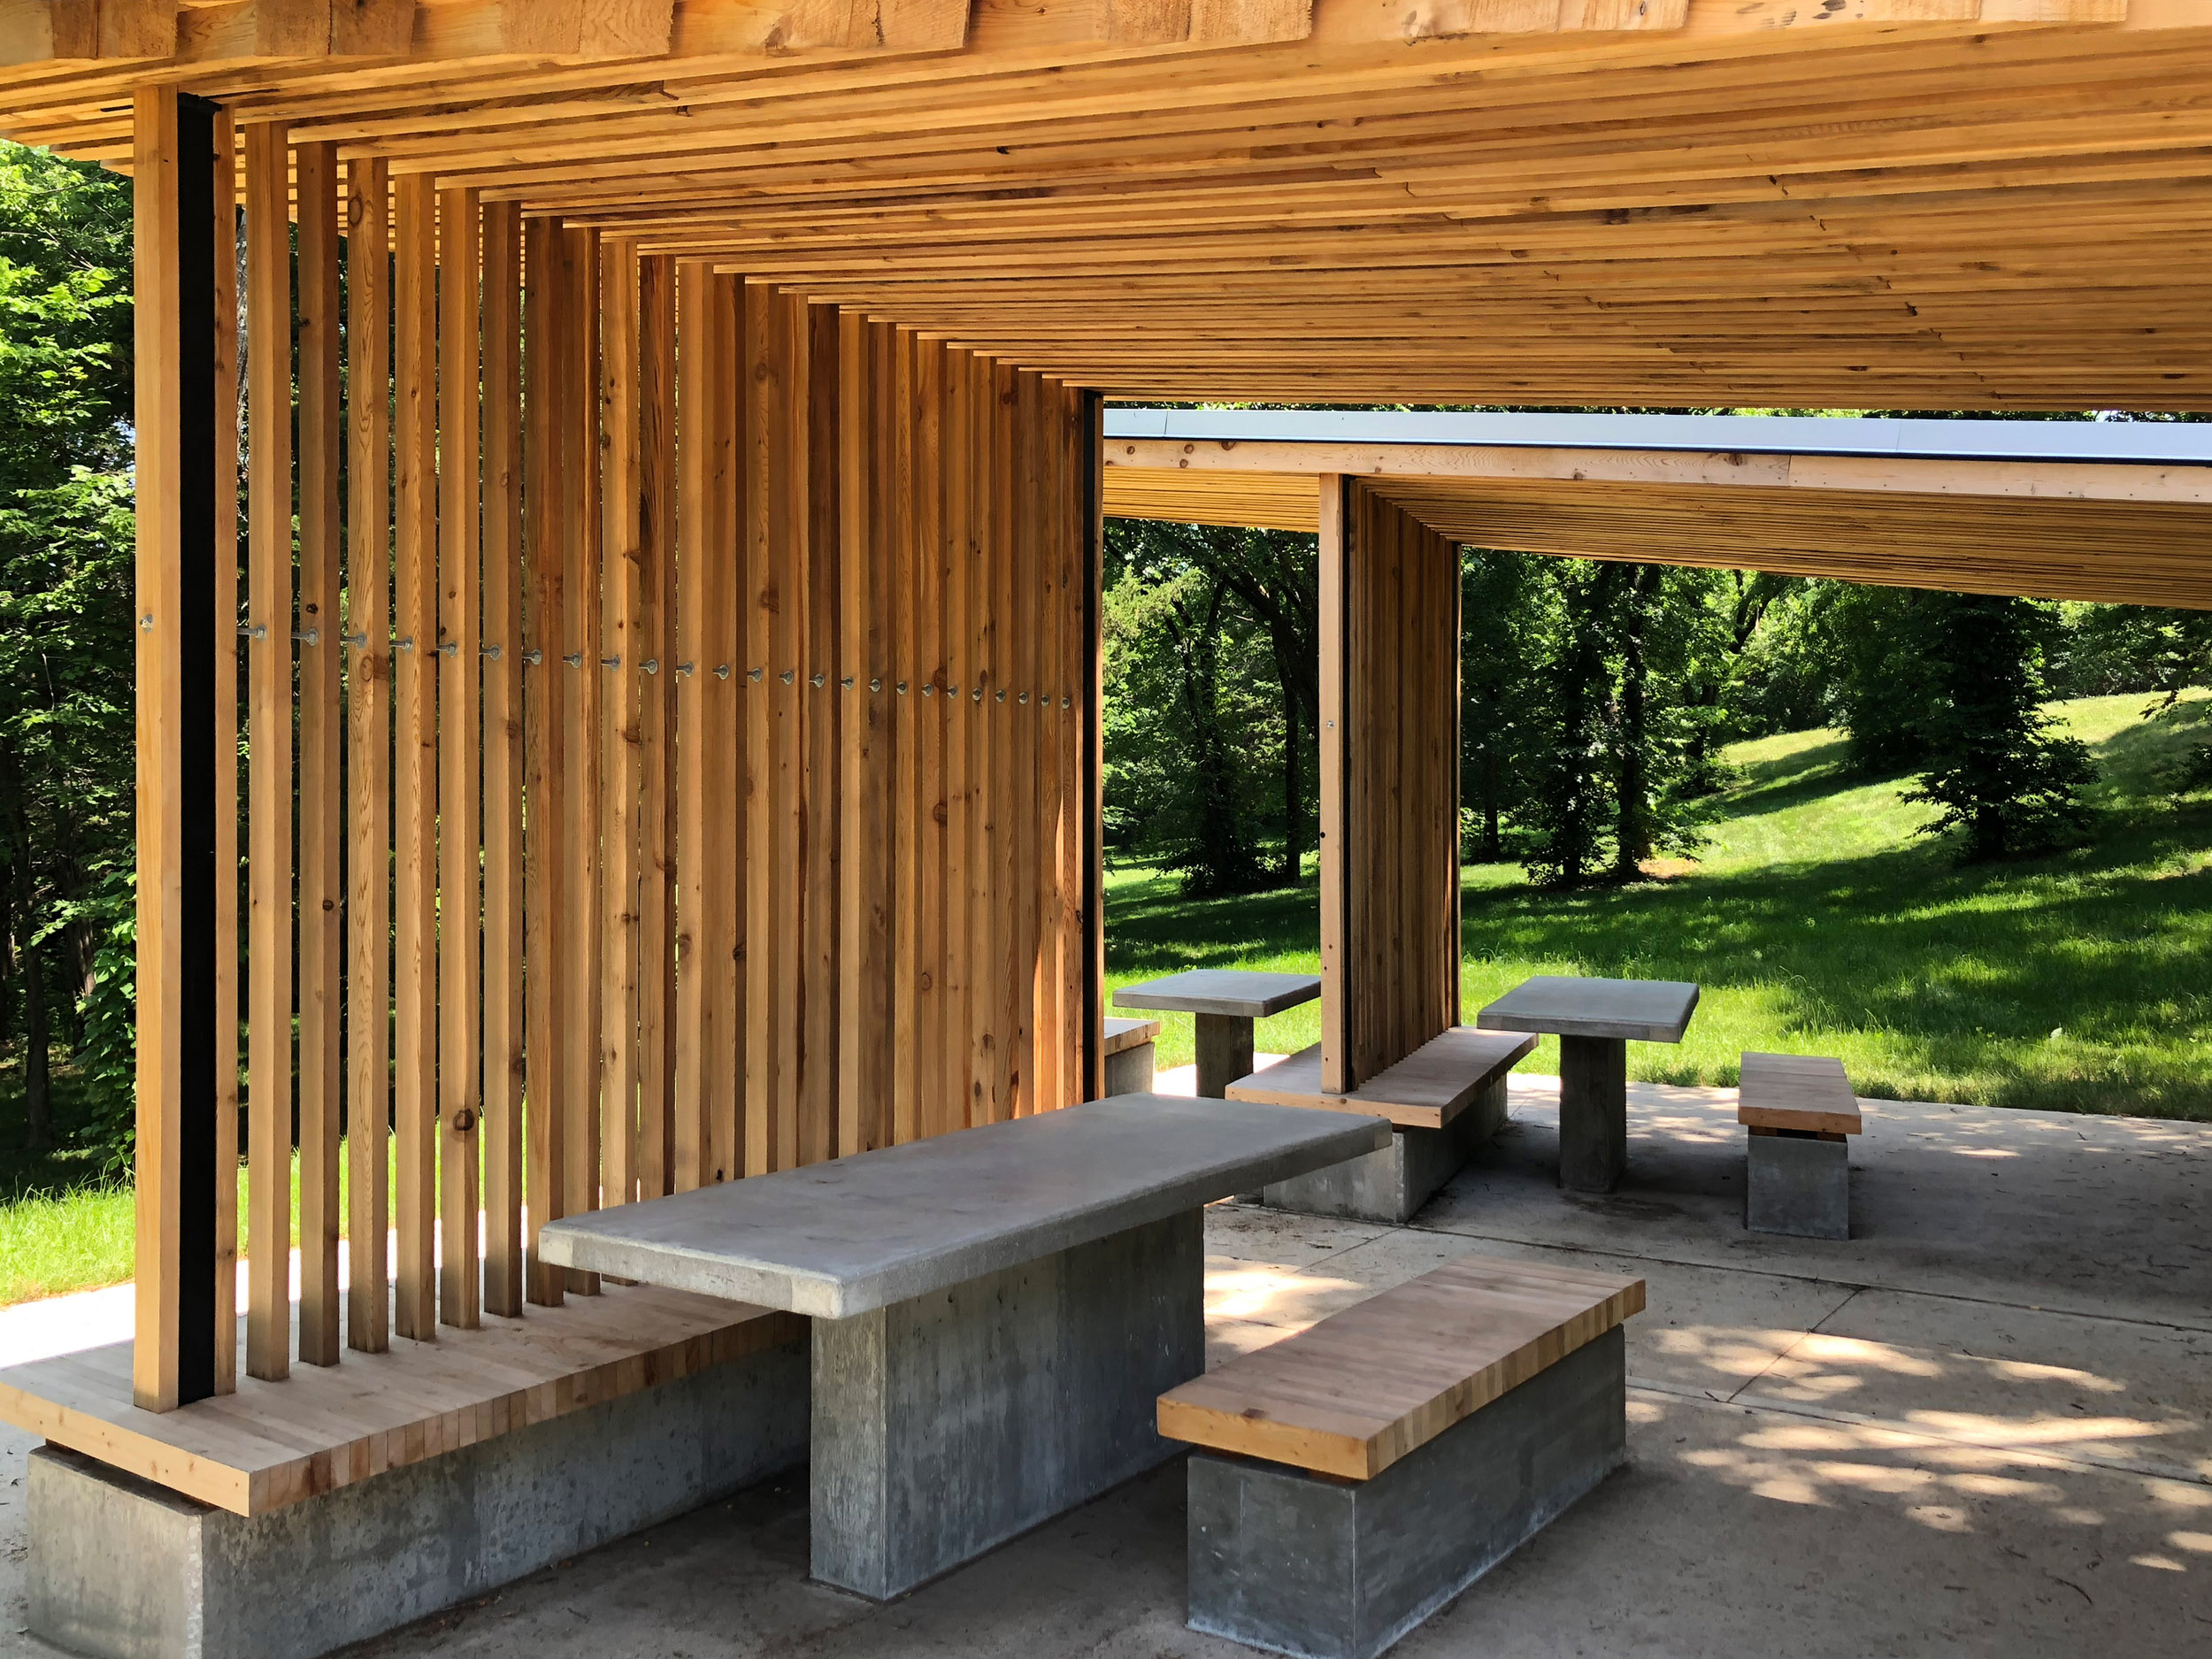 Polaris Pavilion, under the mass timber canopy